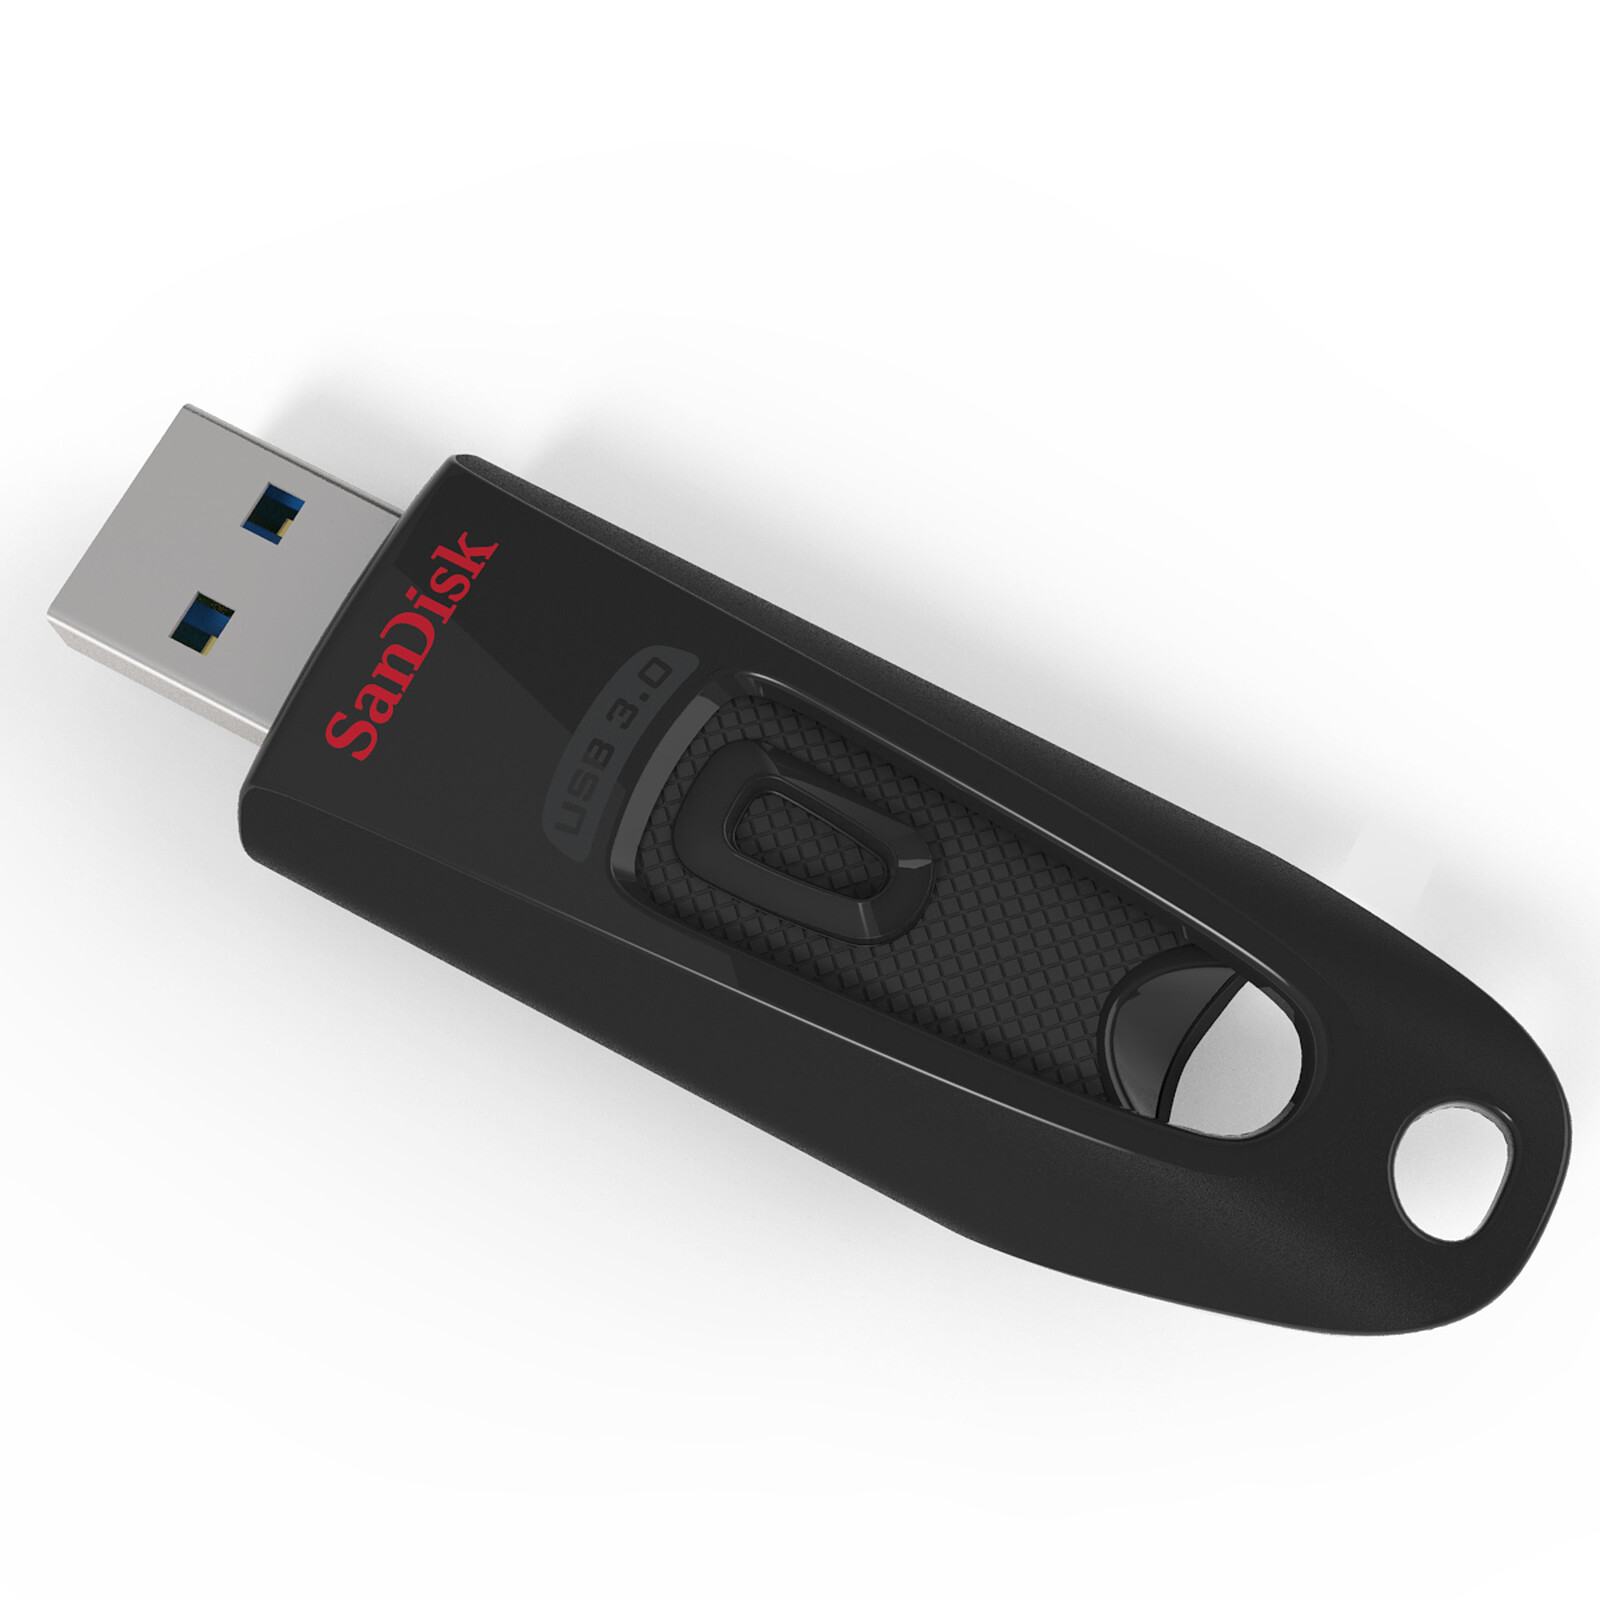 16Go Clé USB-Sandisk 3.0 - Nimbuz Store